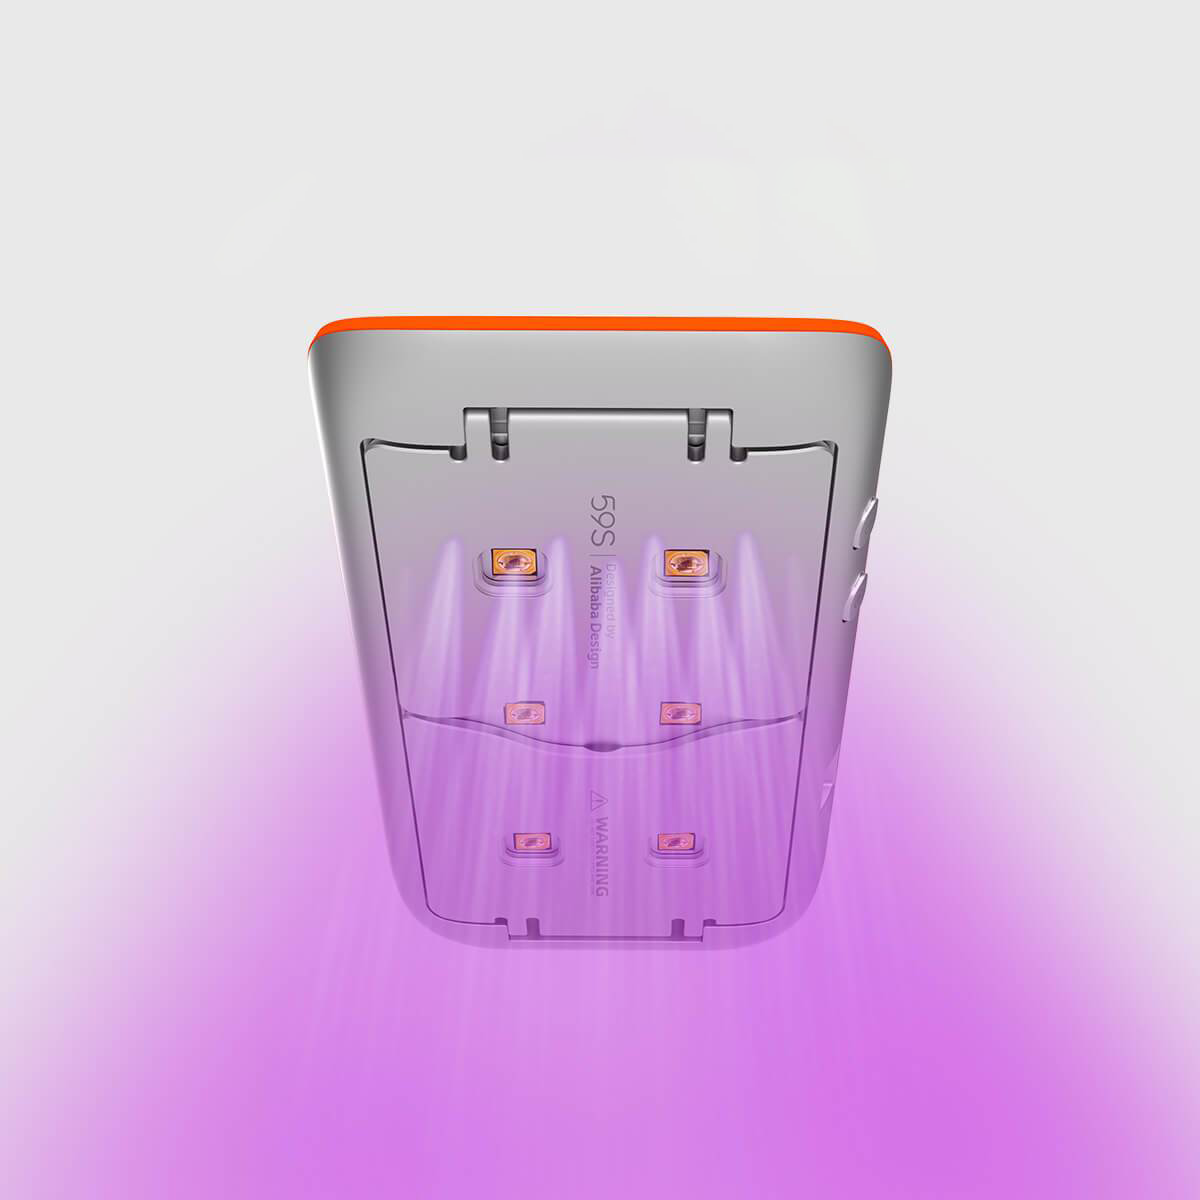 59S UV LED Portable Sterilizer X1 (Silver With Orange) UV light rays